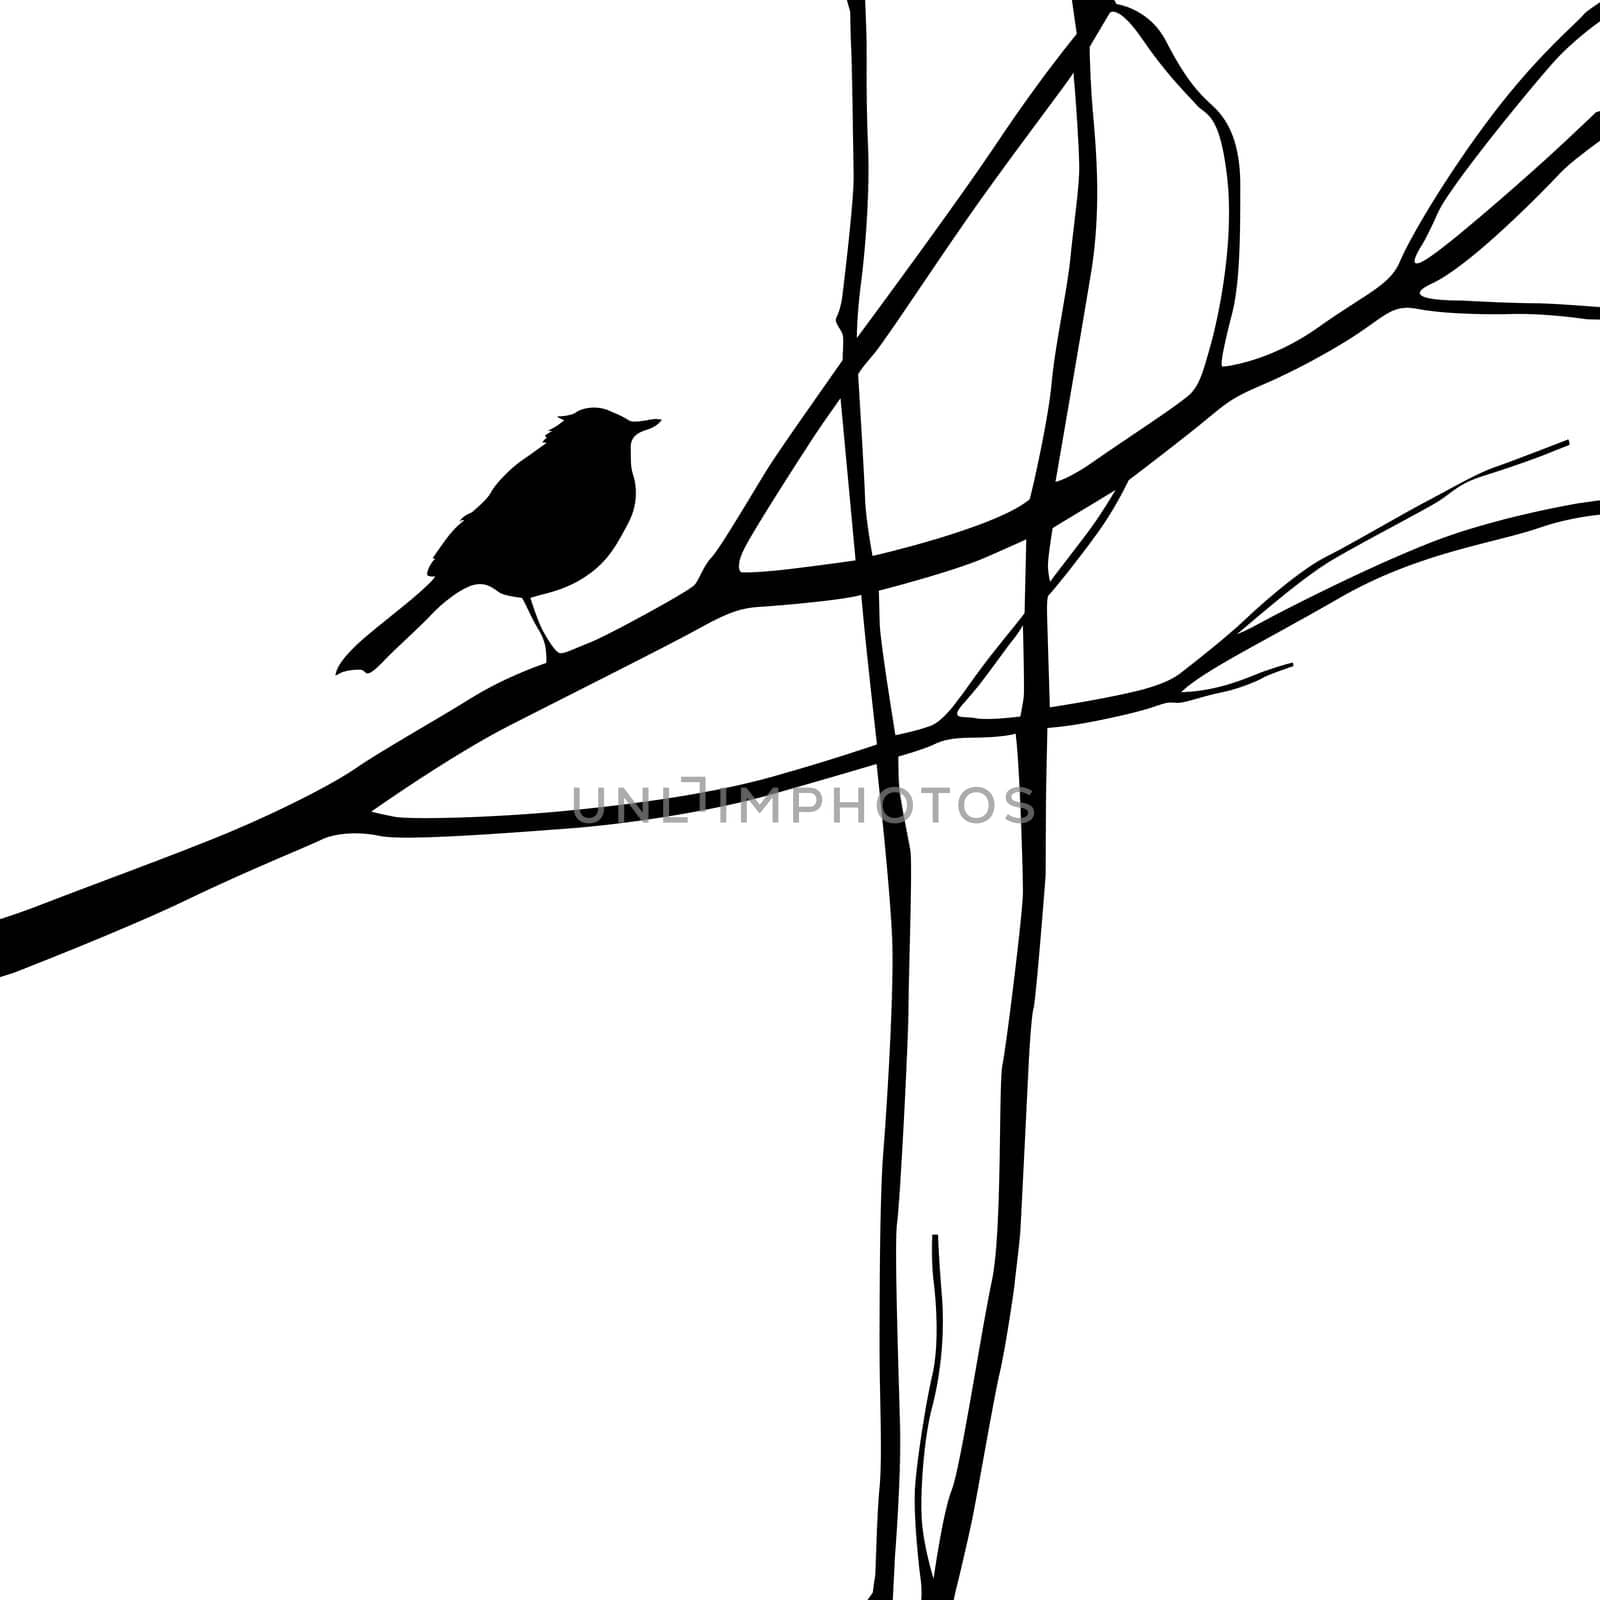 bird silhouette on wood branch